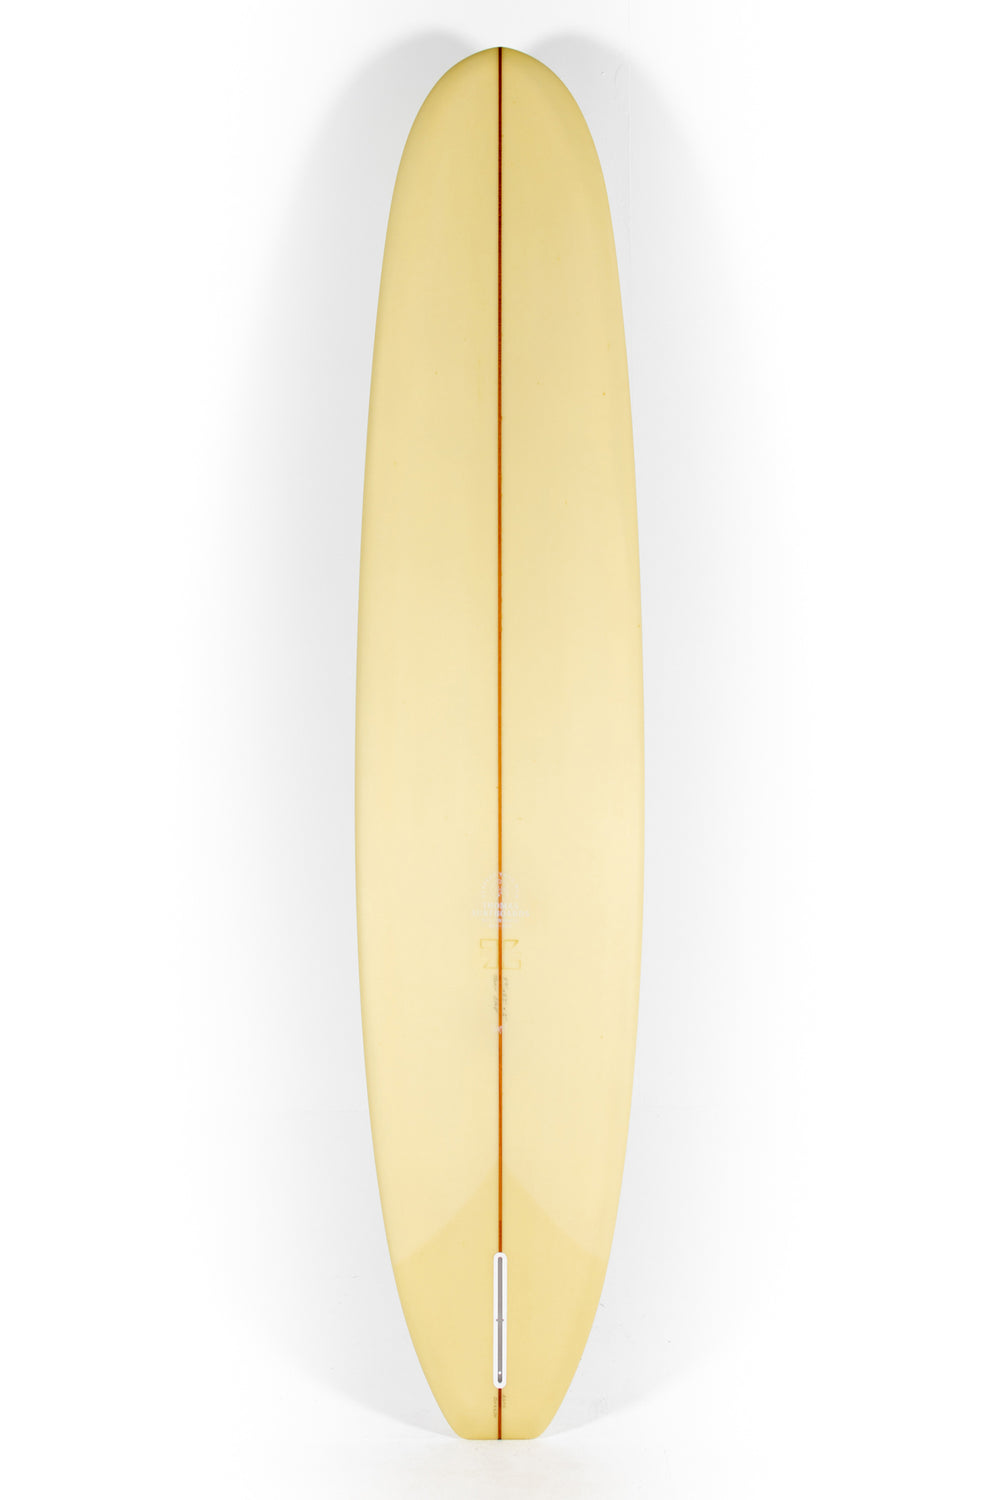 Thomas Surfboards - TOWN BIKE - 9'6